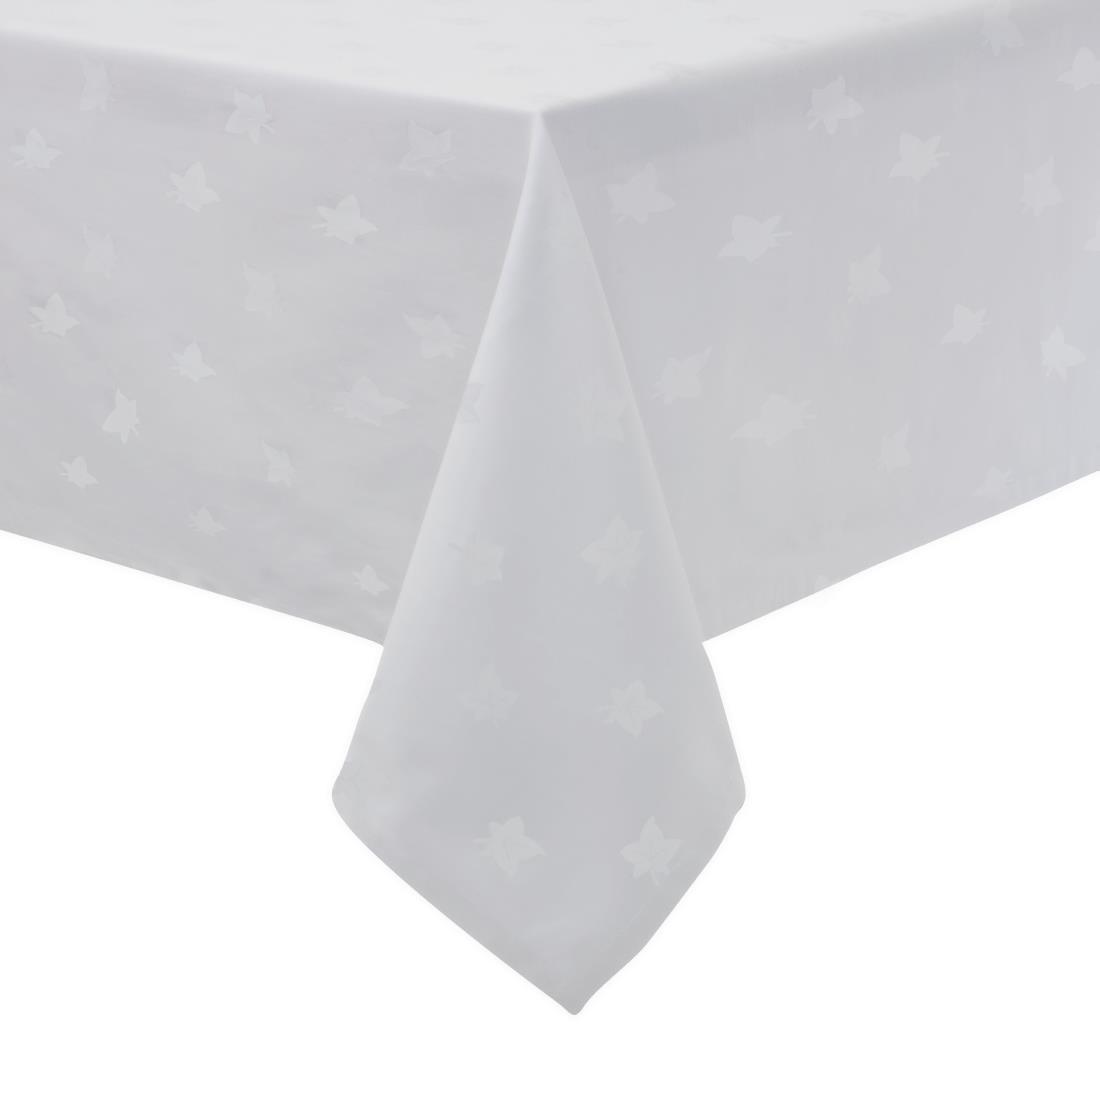 Mitre Luxury Luxor Tablecloth Ivy Leaf White 1350 x 2750mm - GW447  - 1